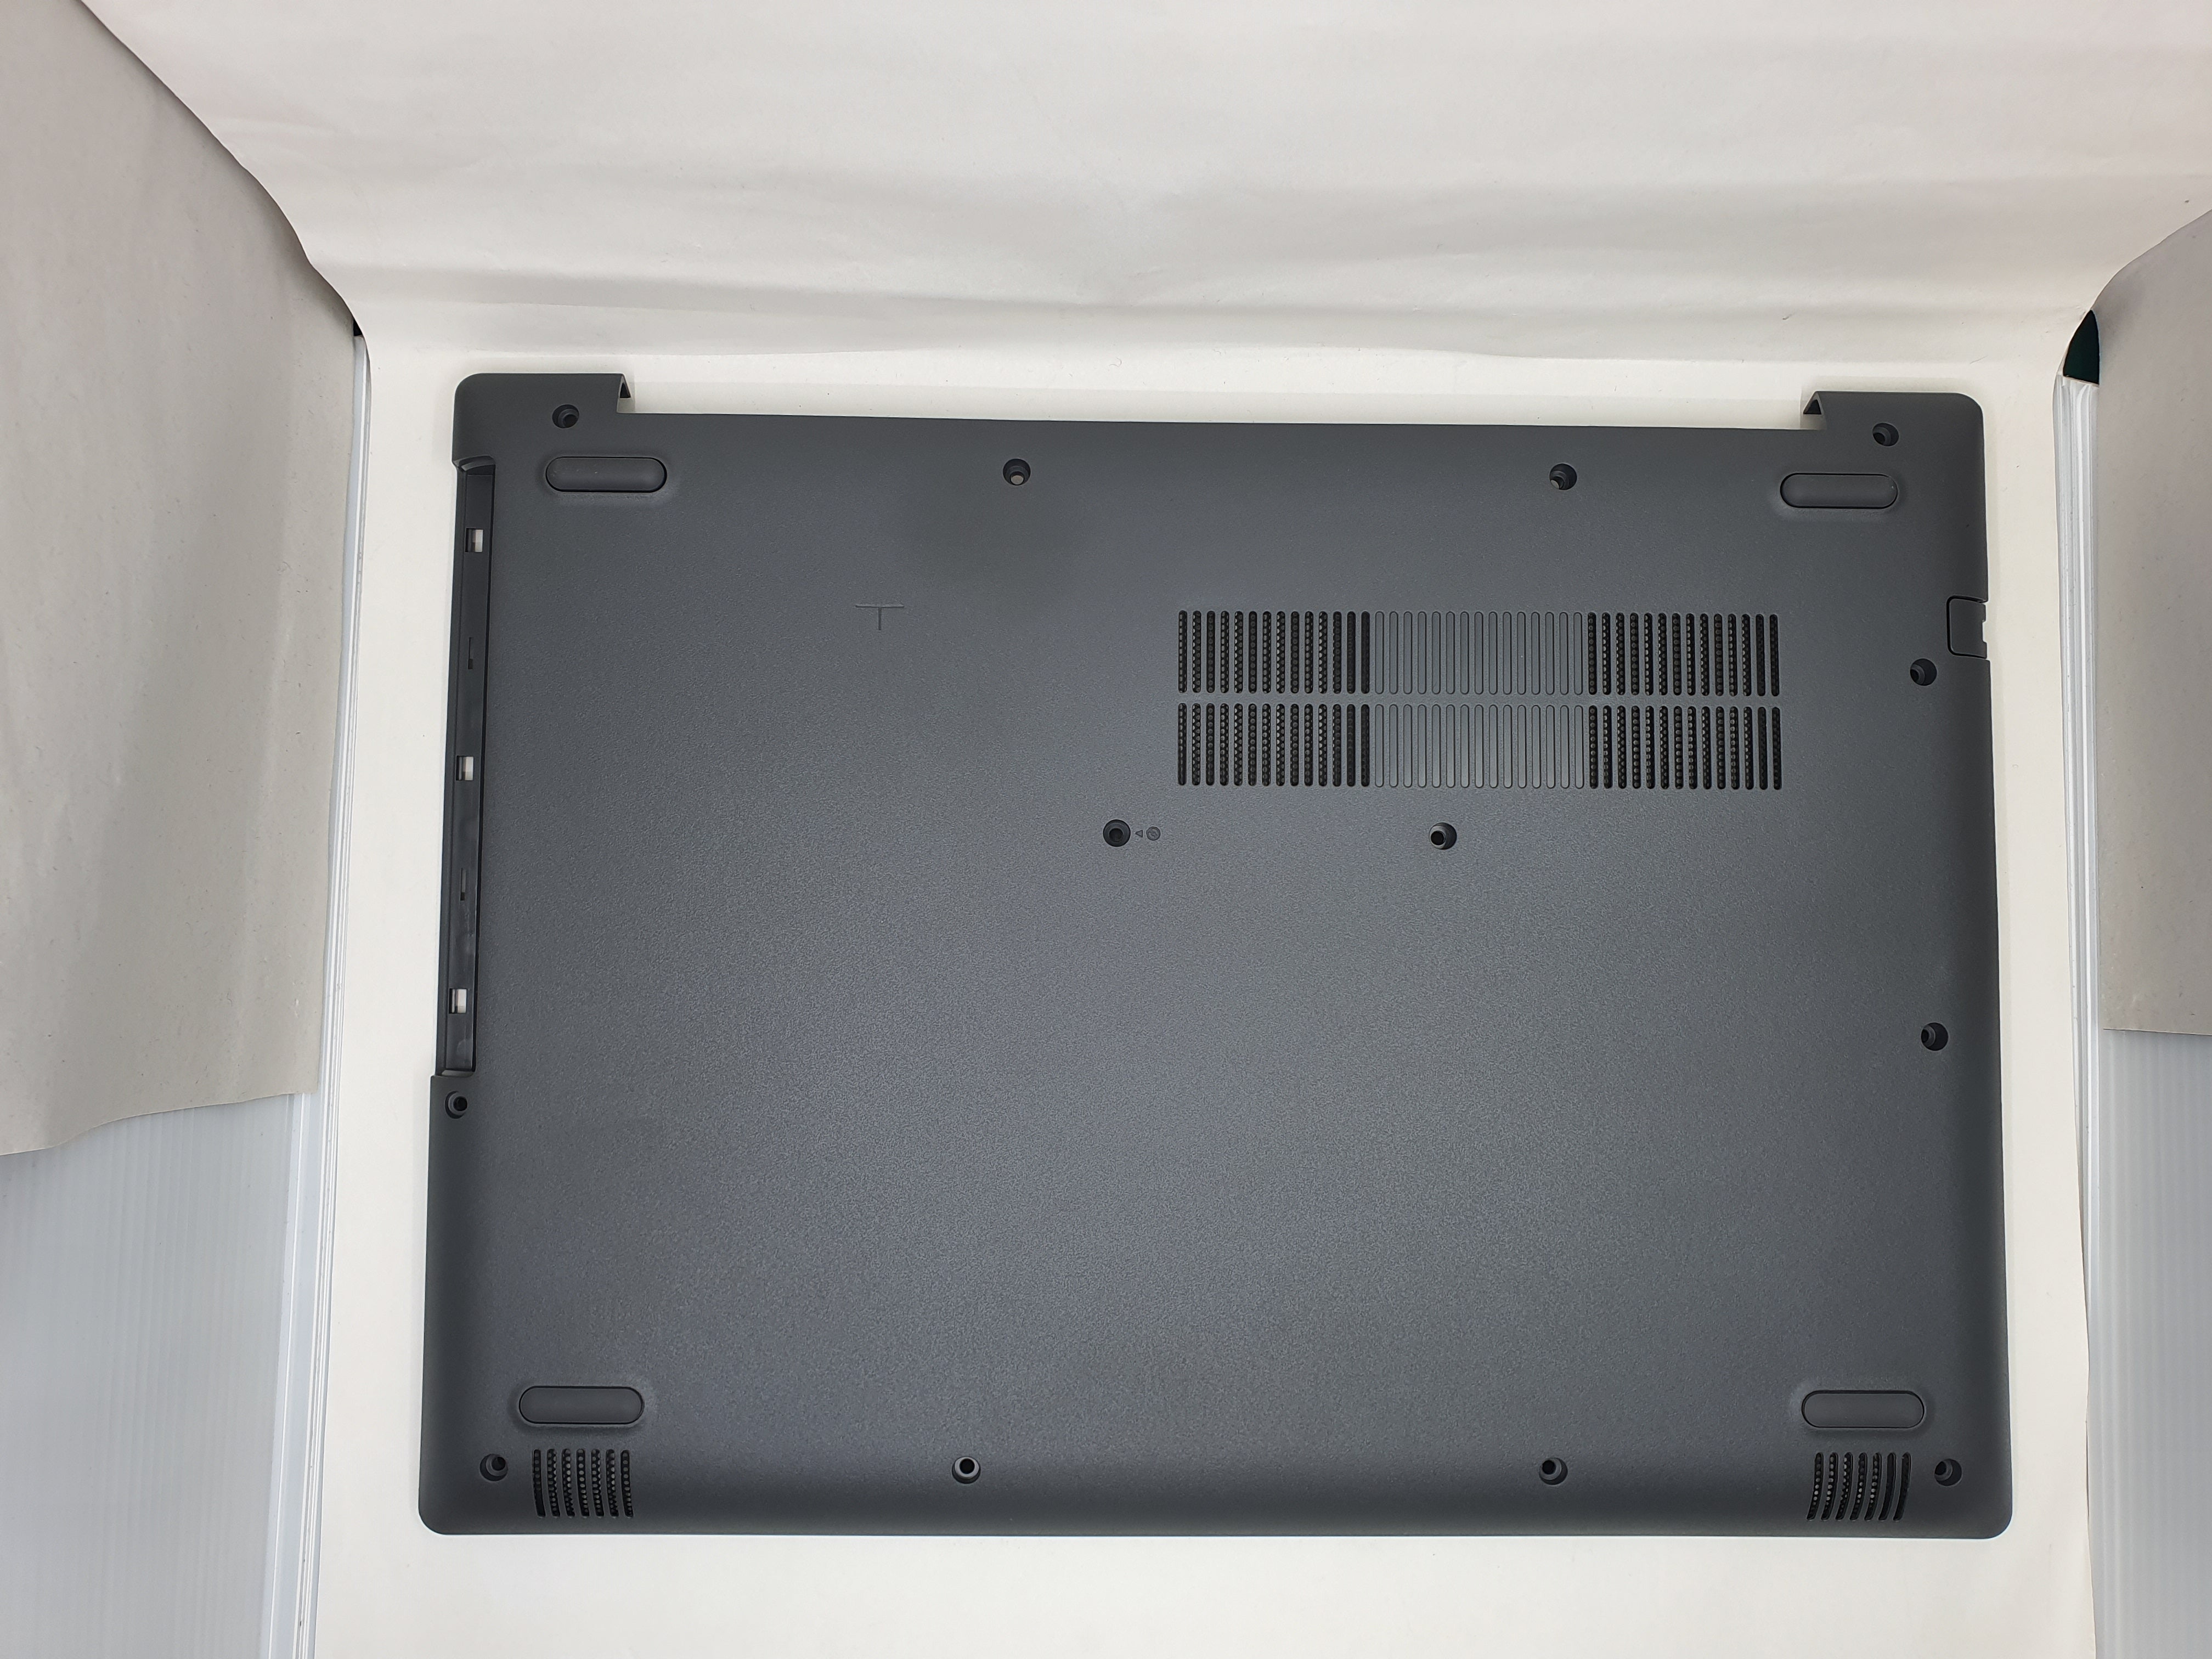 Lenovo Bottom Case IdeaPad 320-14IKB WL for Replacement IdeaPad 320-15IKB